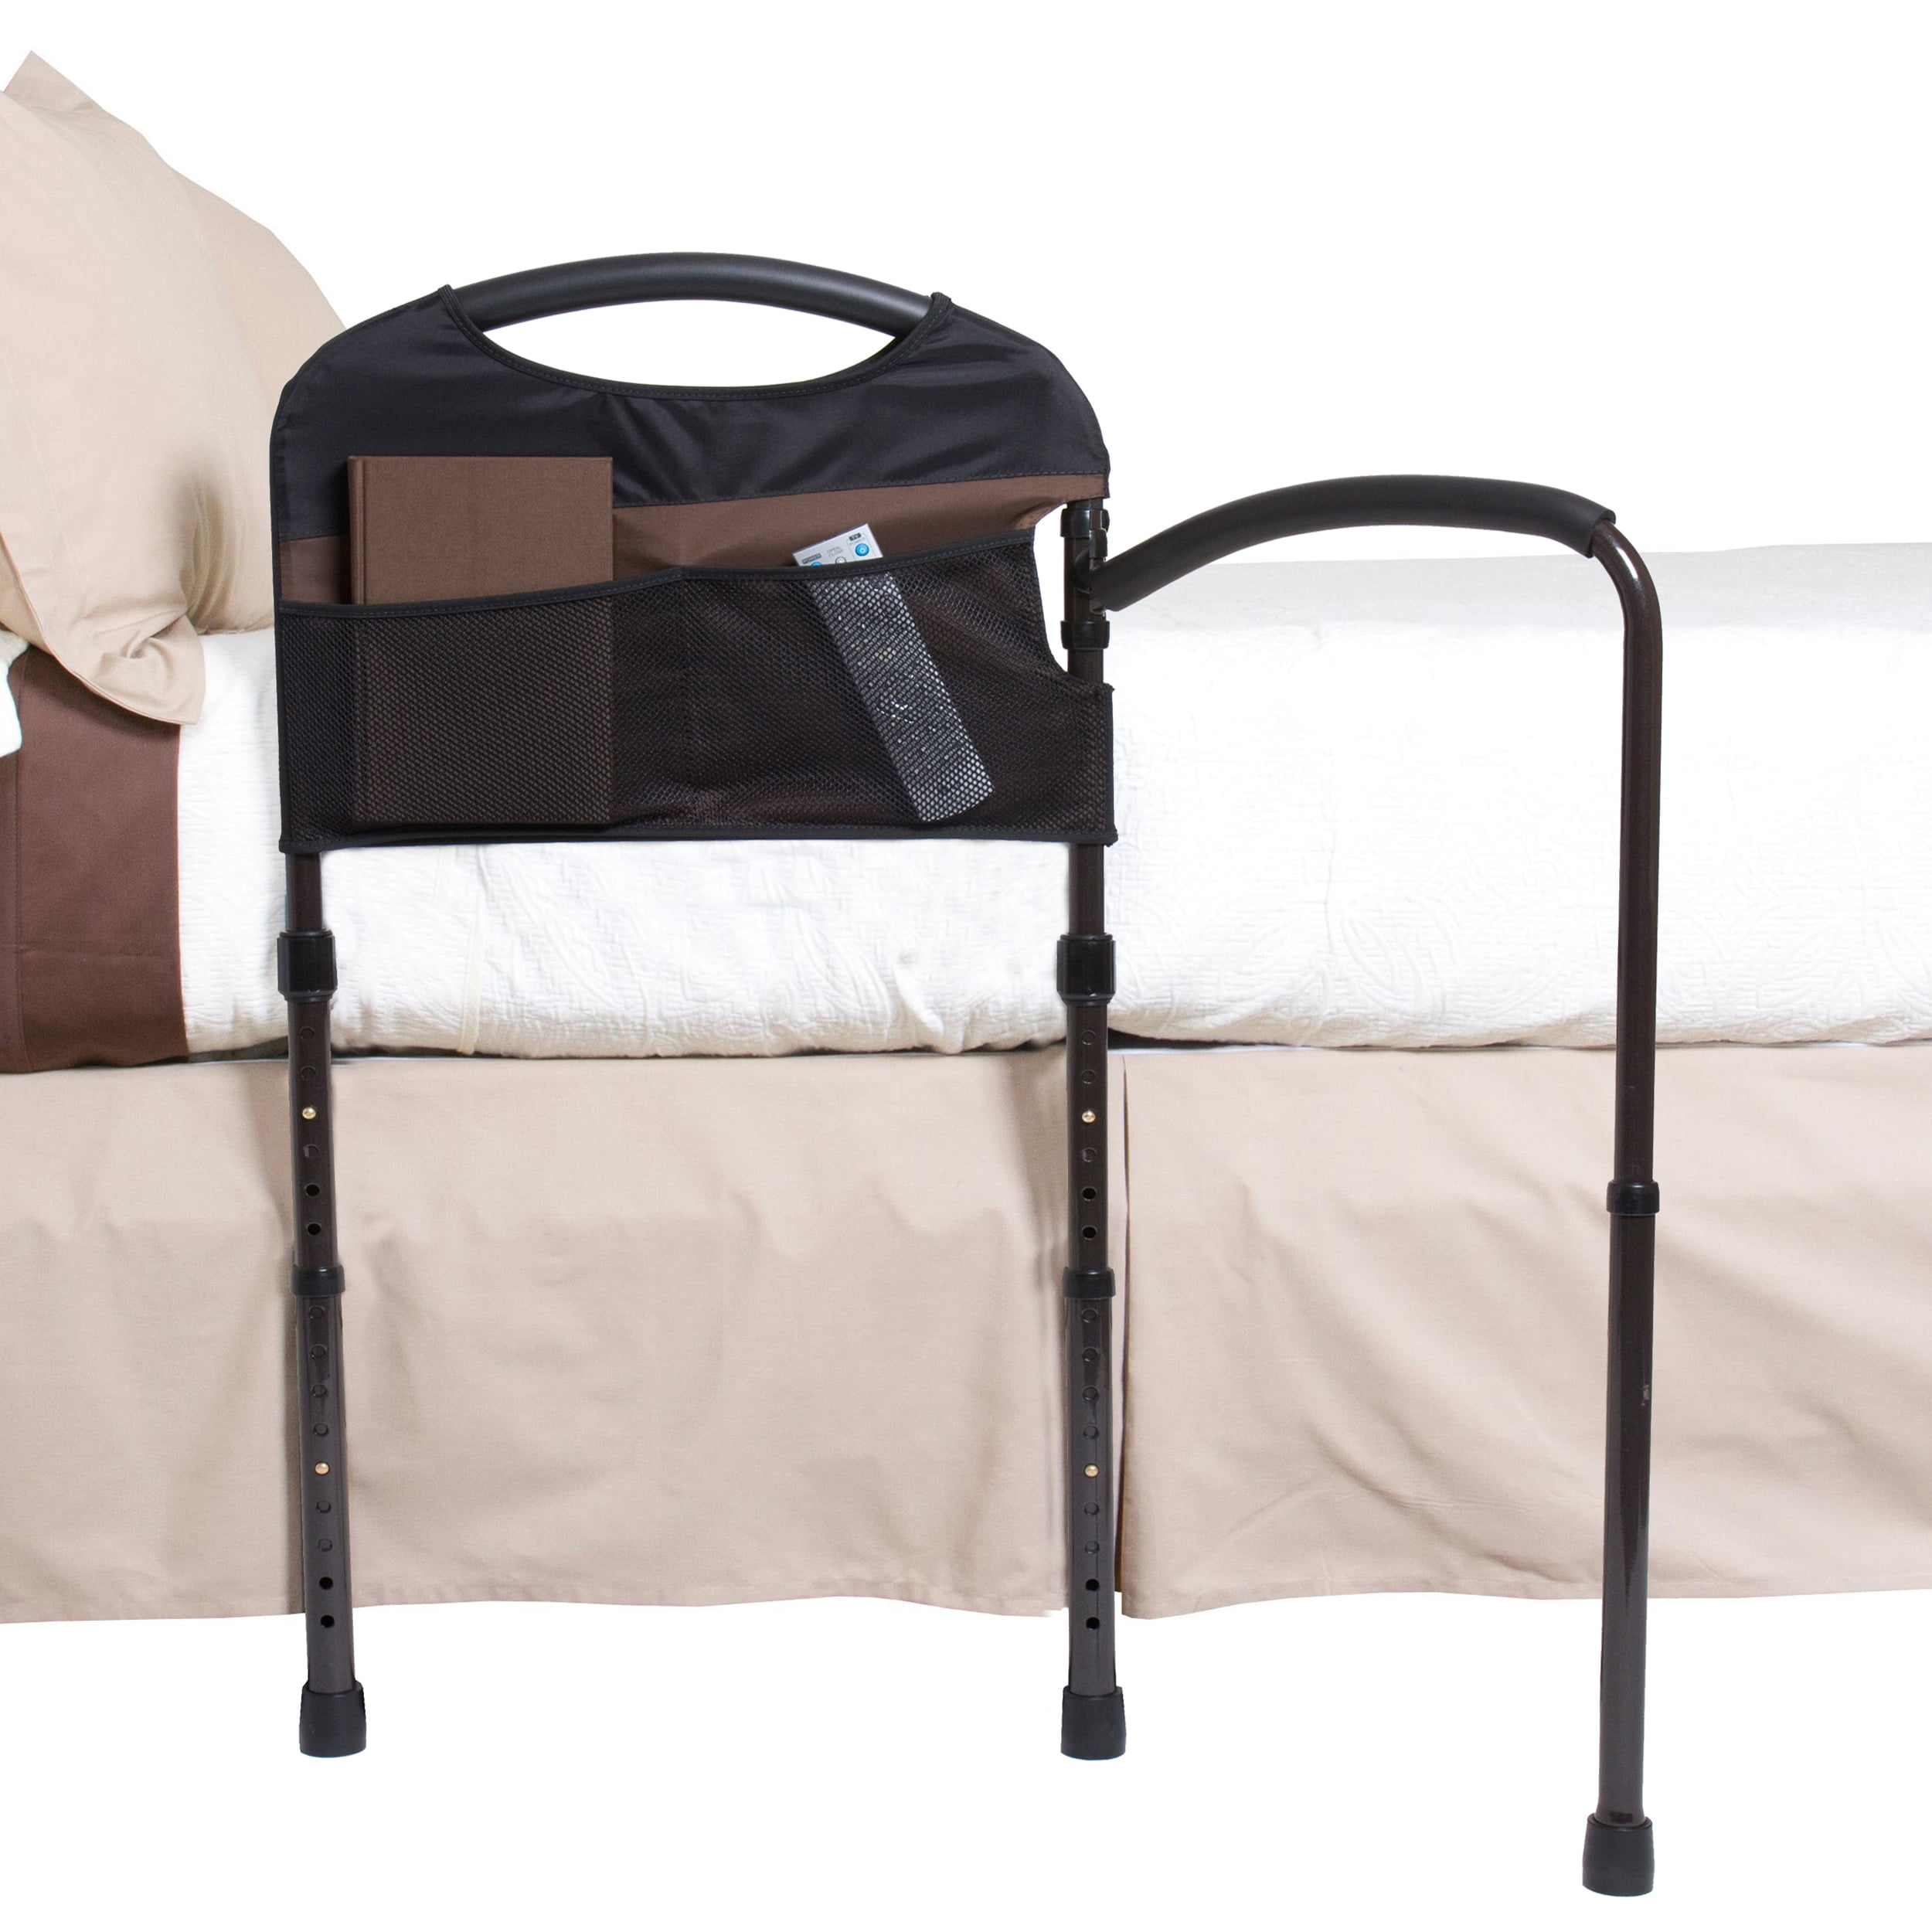 Stander Mobility Bed Rail, Adjustable Bed Assist Grab Bar for Seniors -  